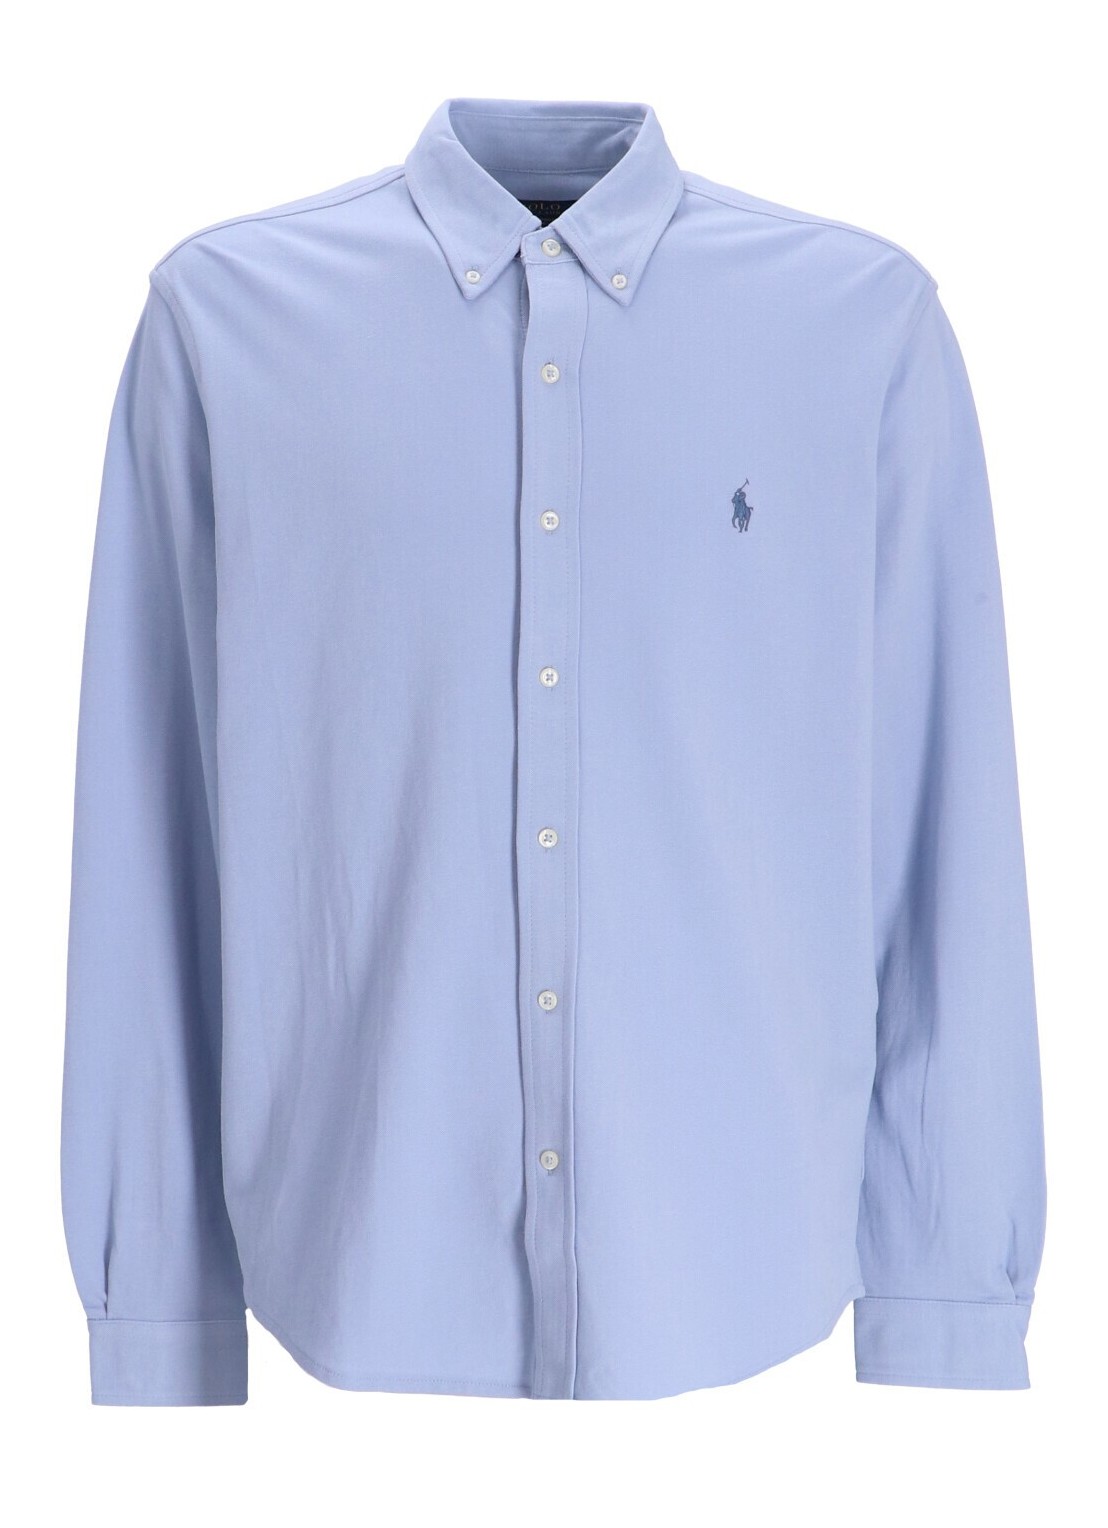 Camiseria polo ralph lauren shirt man lsfbbdm5-long sleeve-knit 710654408103 estate blue talla XXL
 